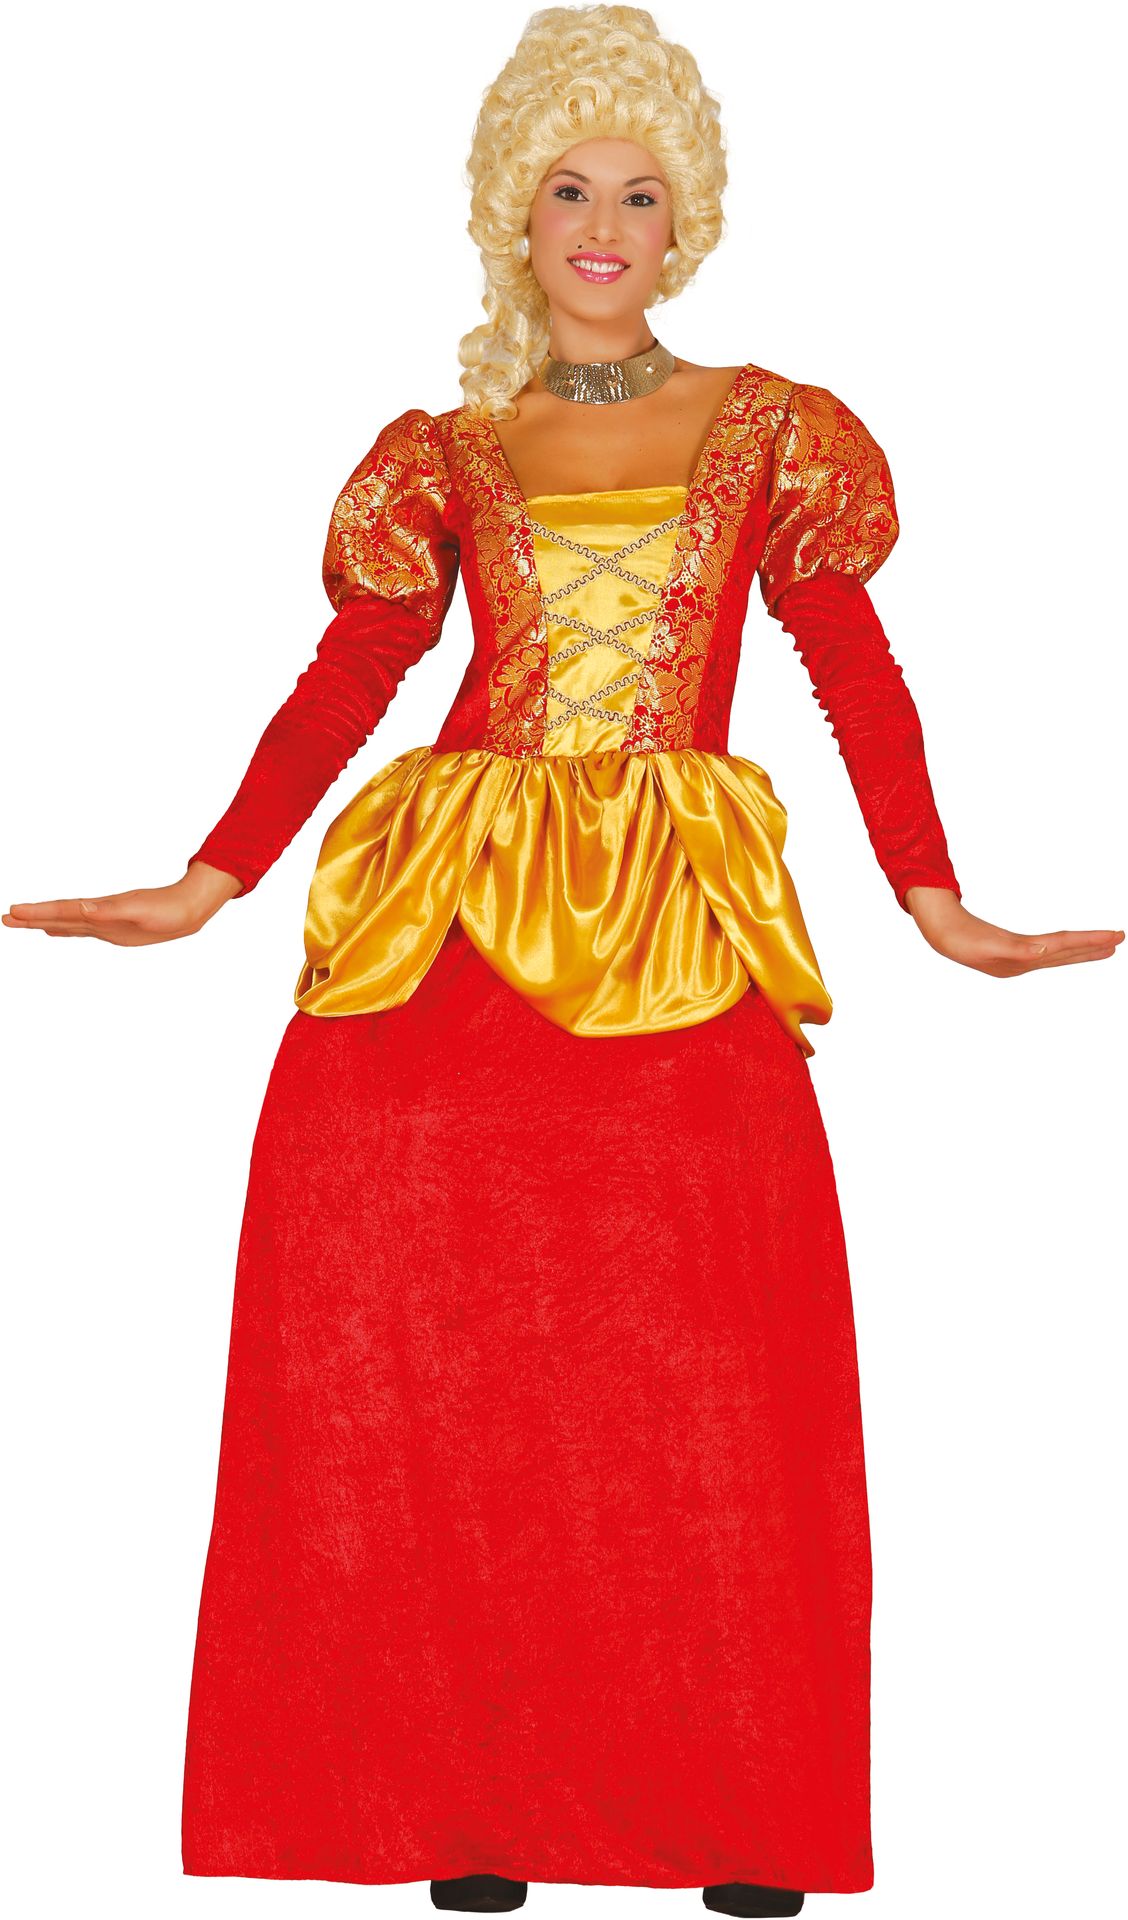 Rode markiezin jurk